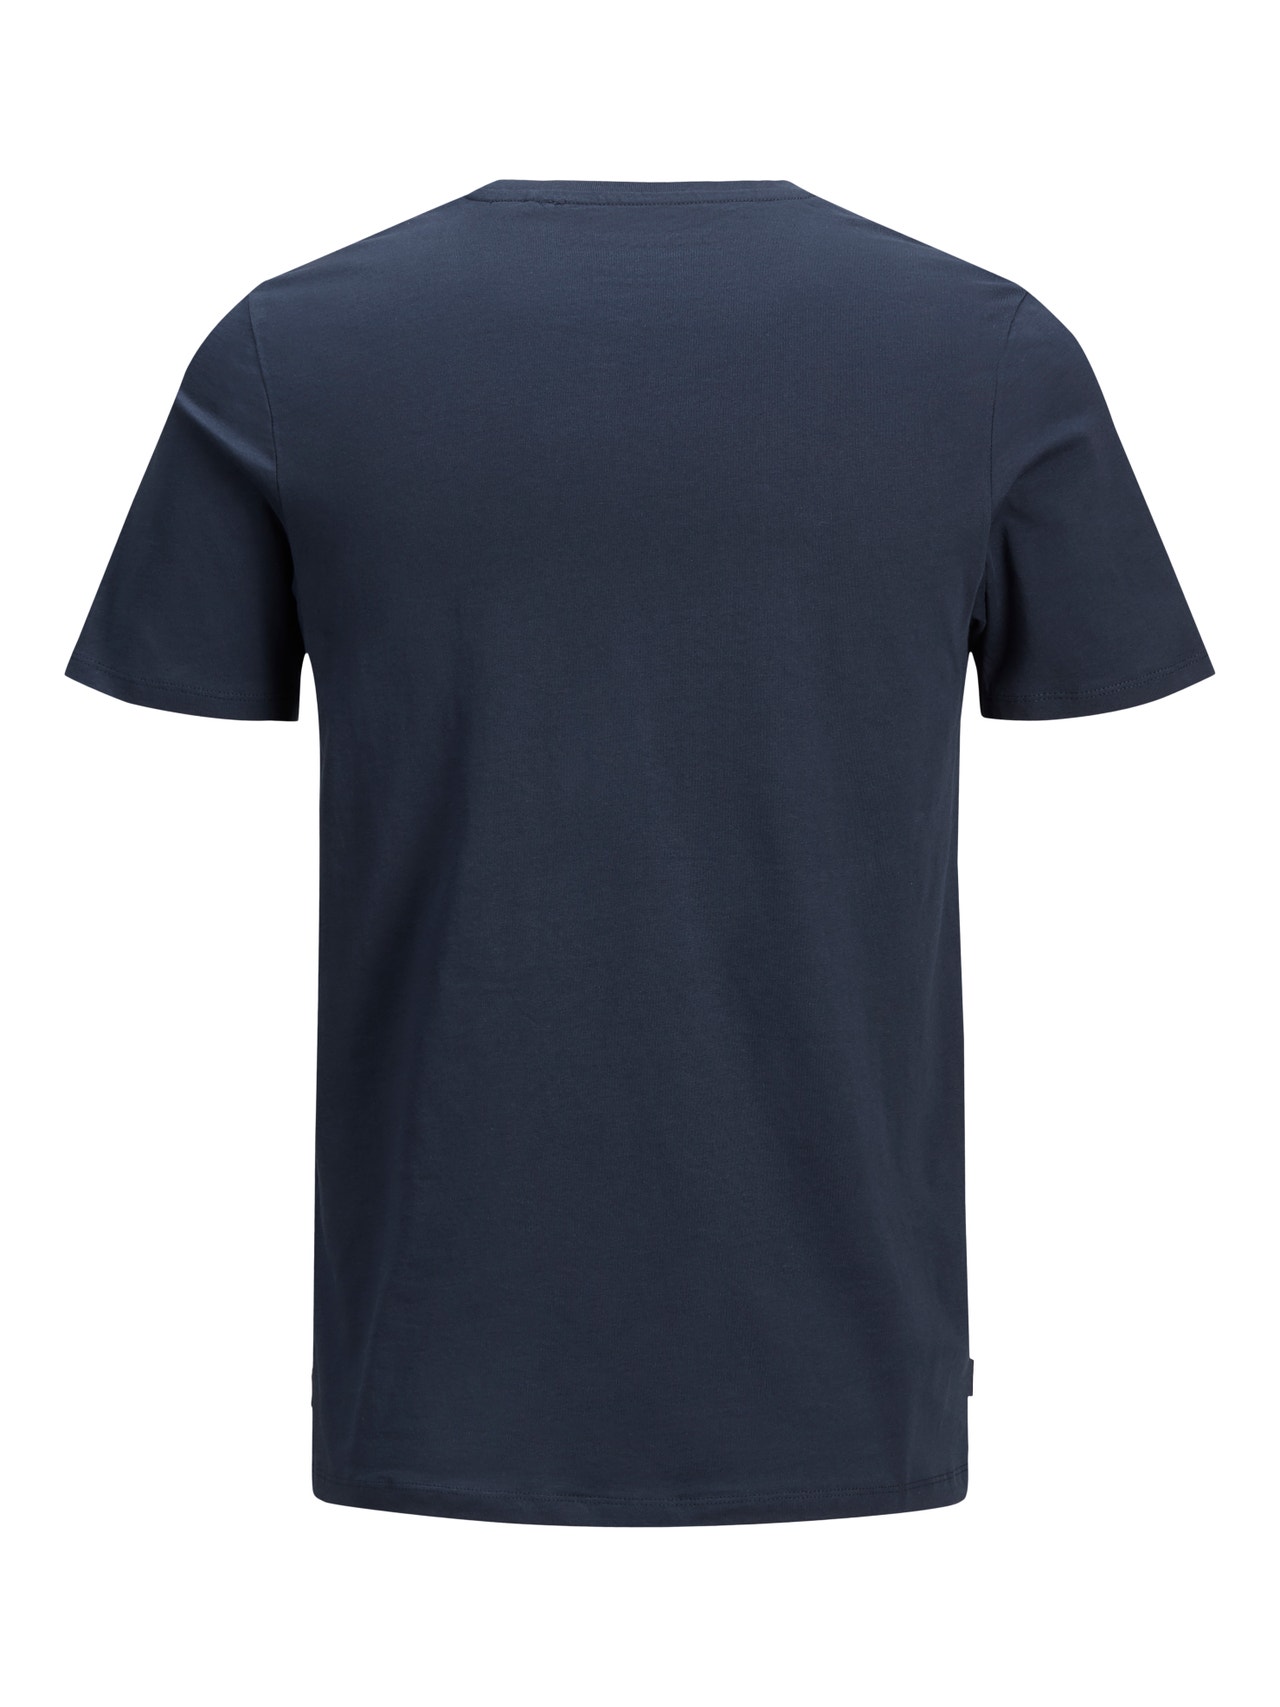 Jack & Jones T-shirt Semplice Girocollo -Navy Blazer - 12156101